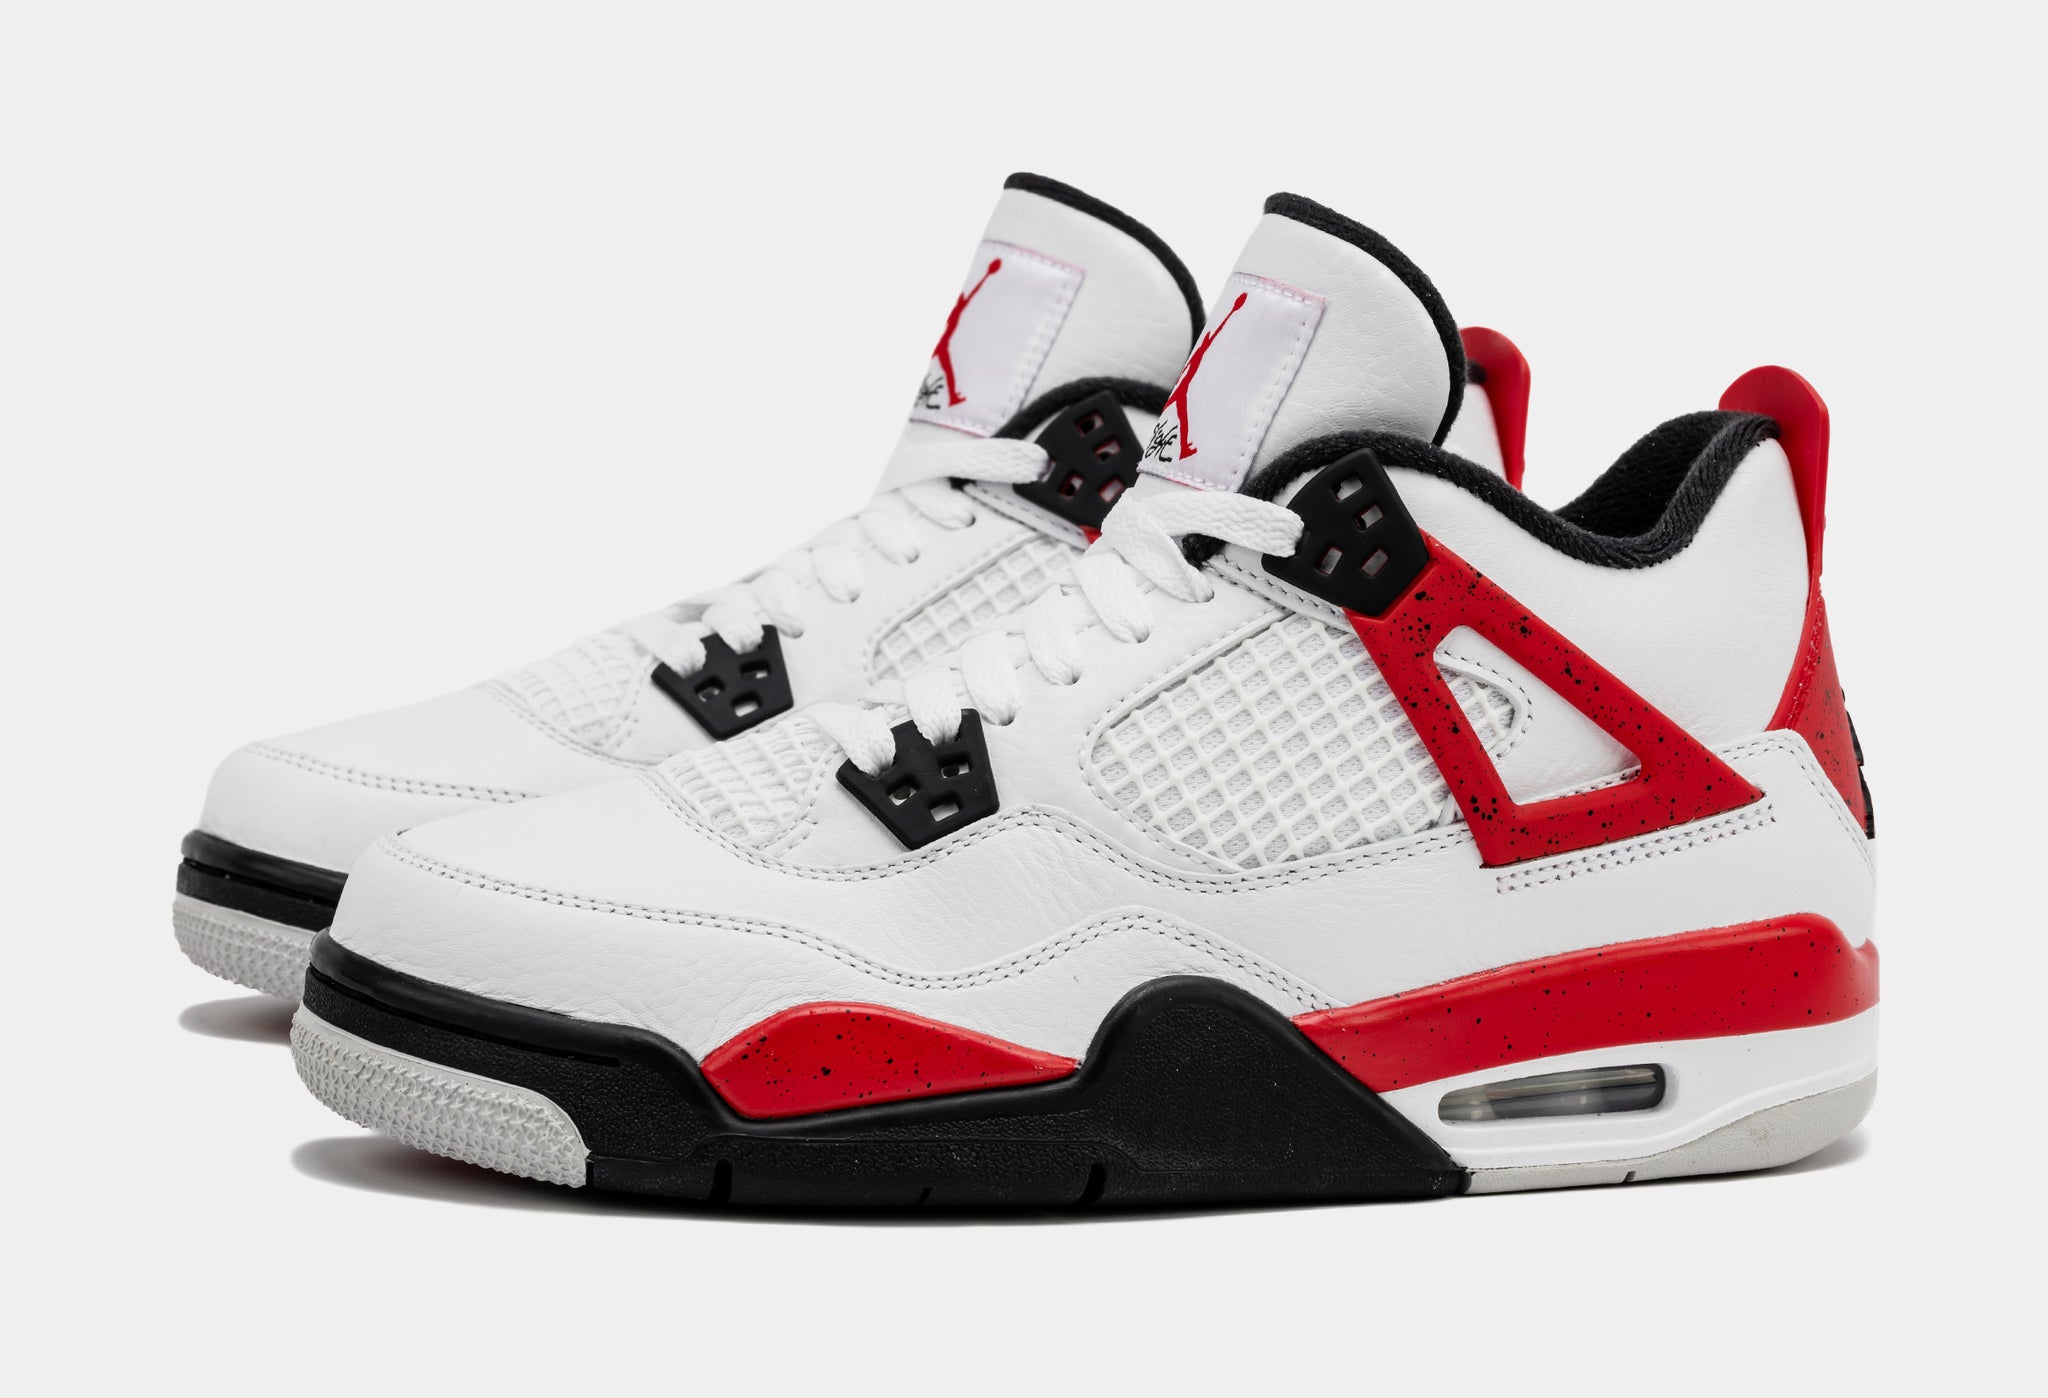 Jordan Air Jordan 4 Red Cement School Lifestyle Shoes White Red 408452-161 – Shoe Palace